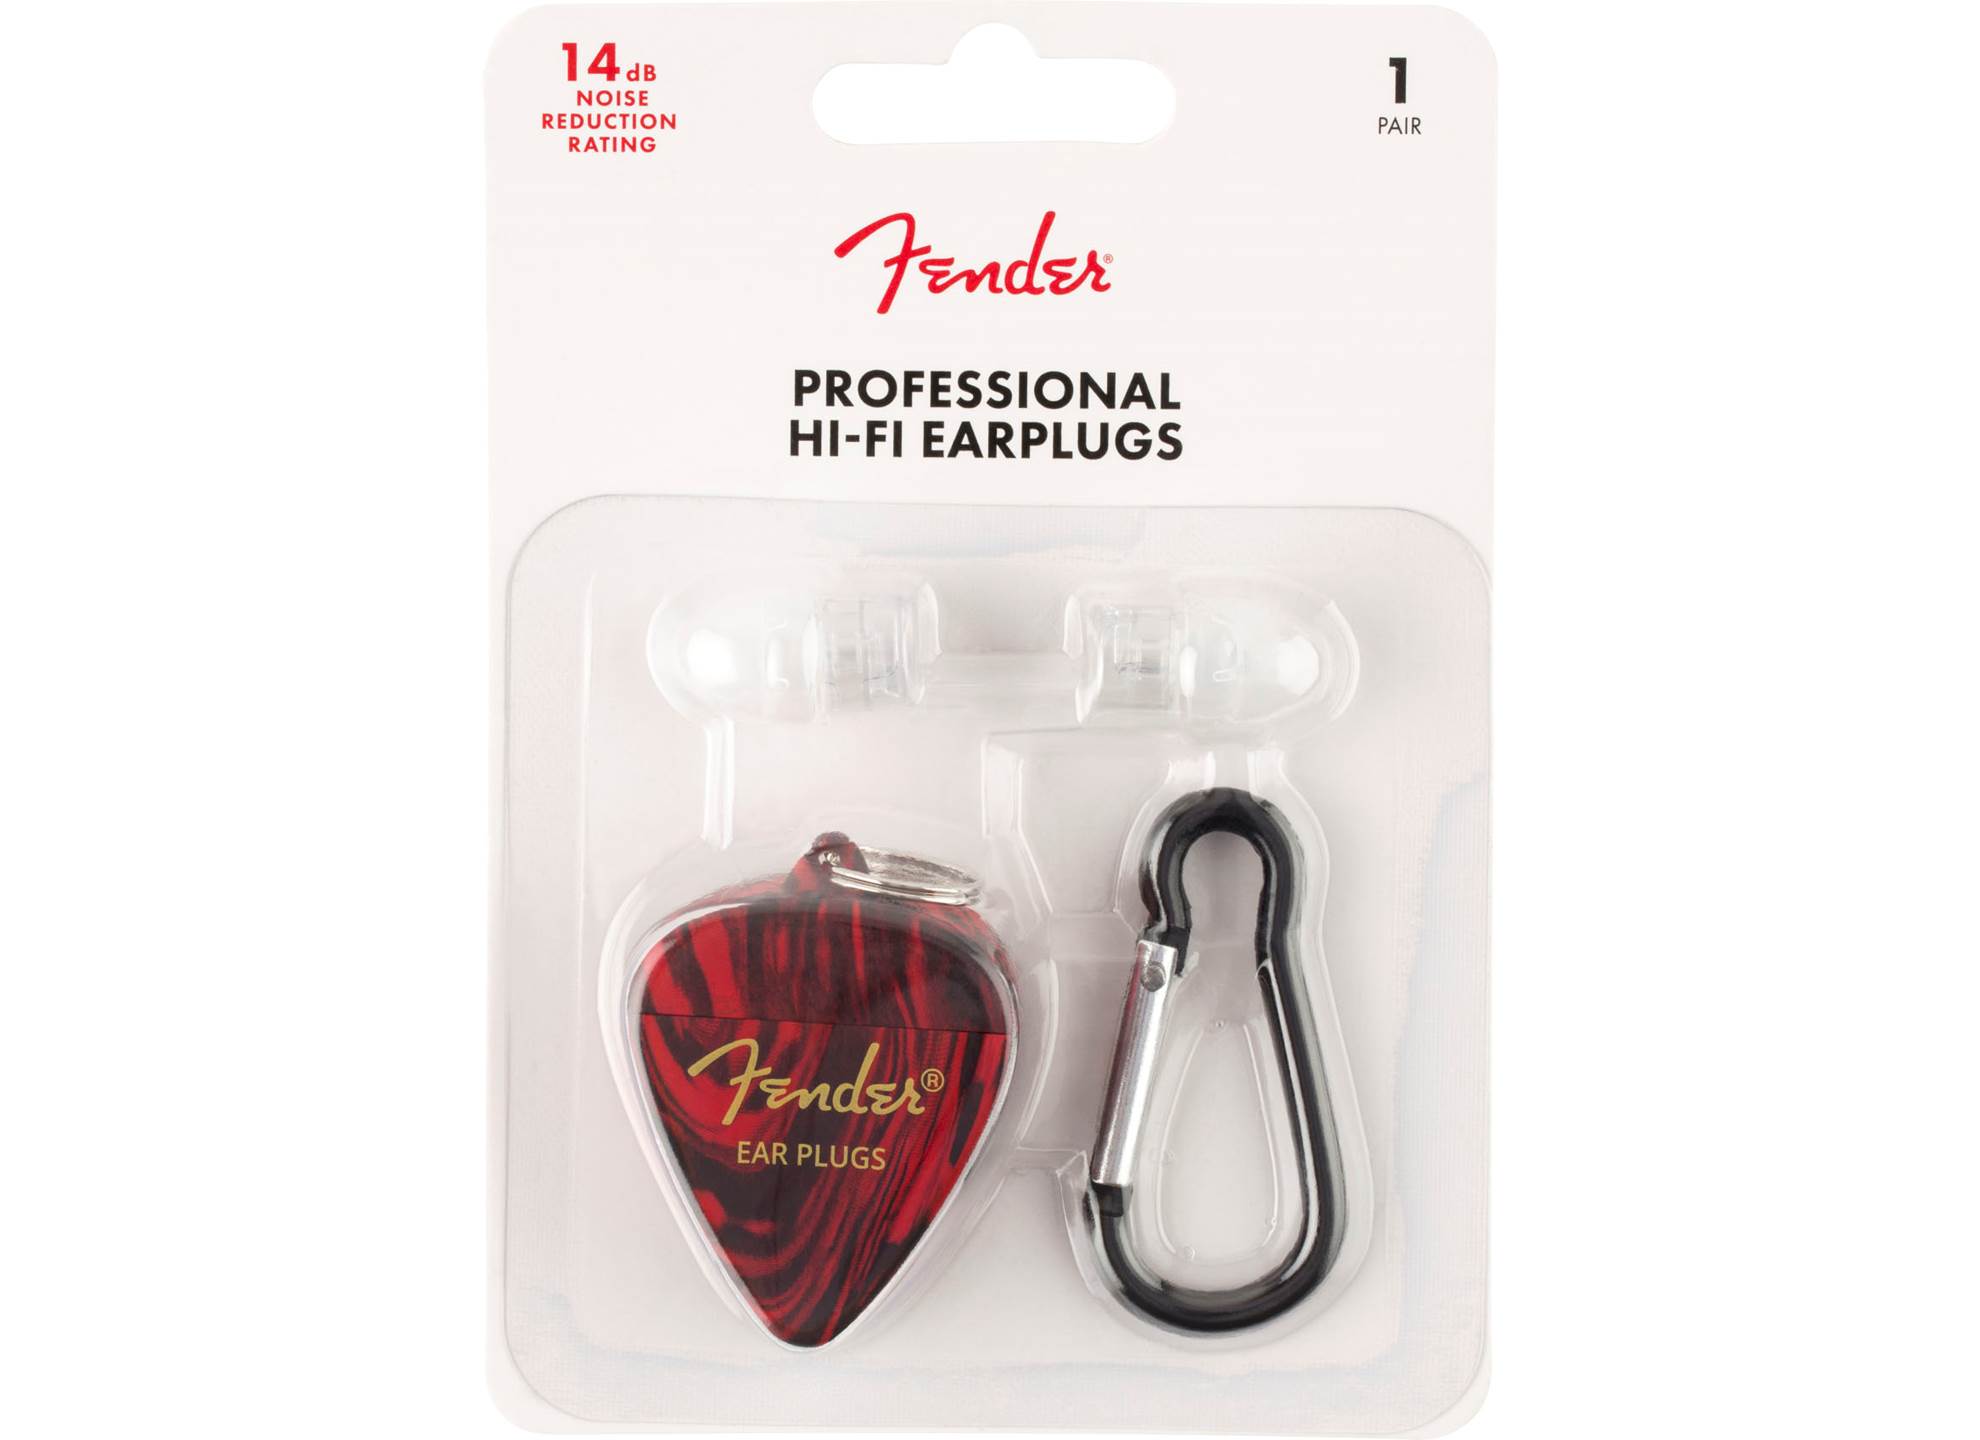 Professional Hi-Fi Ear Plugs